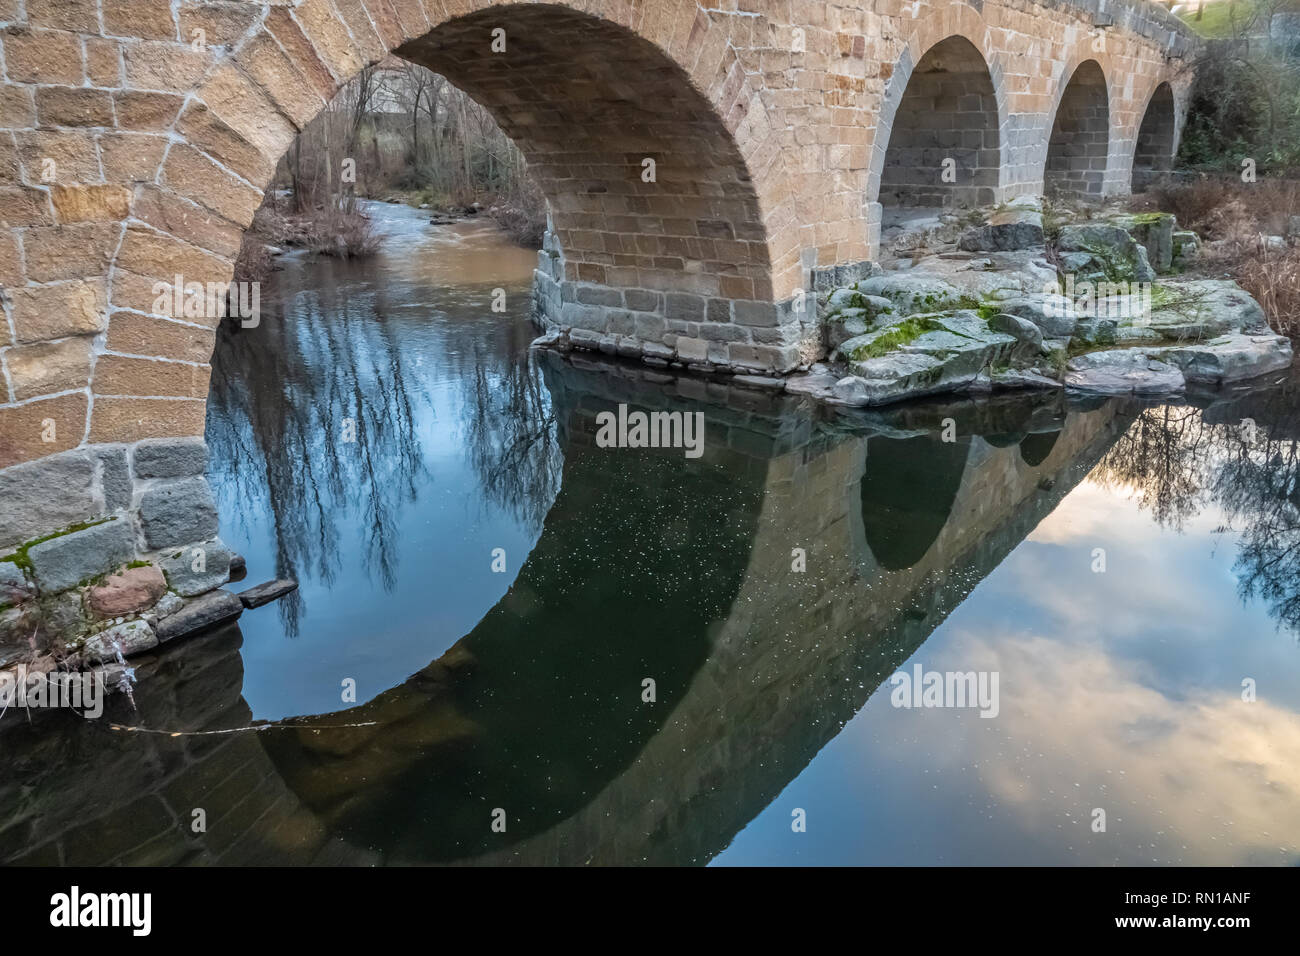 The Roman bridge of Avila (Puente Romano de Avila), Castile-Leon, Spain. Built in the 1st century, spanning the Adaja River on a route leading to the  Stock Photo